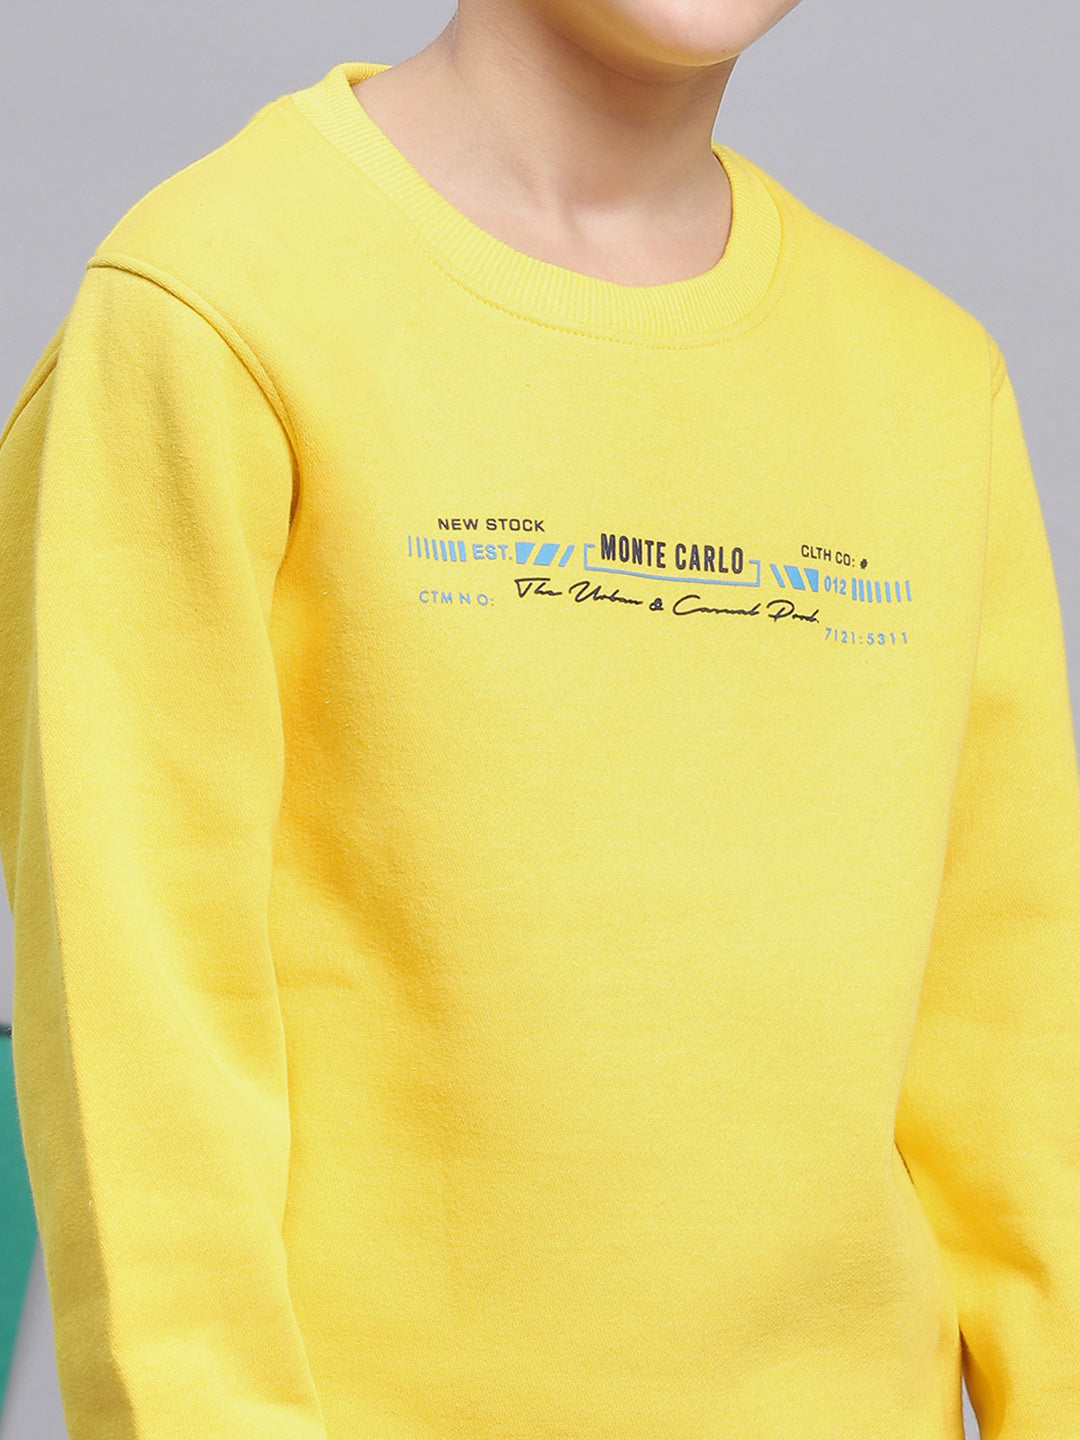 Boys Yellow Printed Round Neck Full Sleeve Sweatshirt